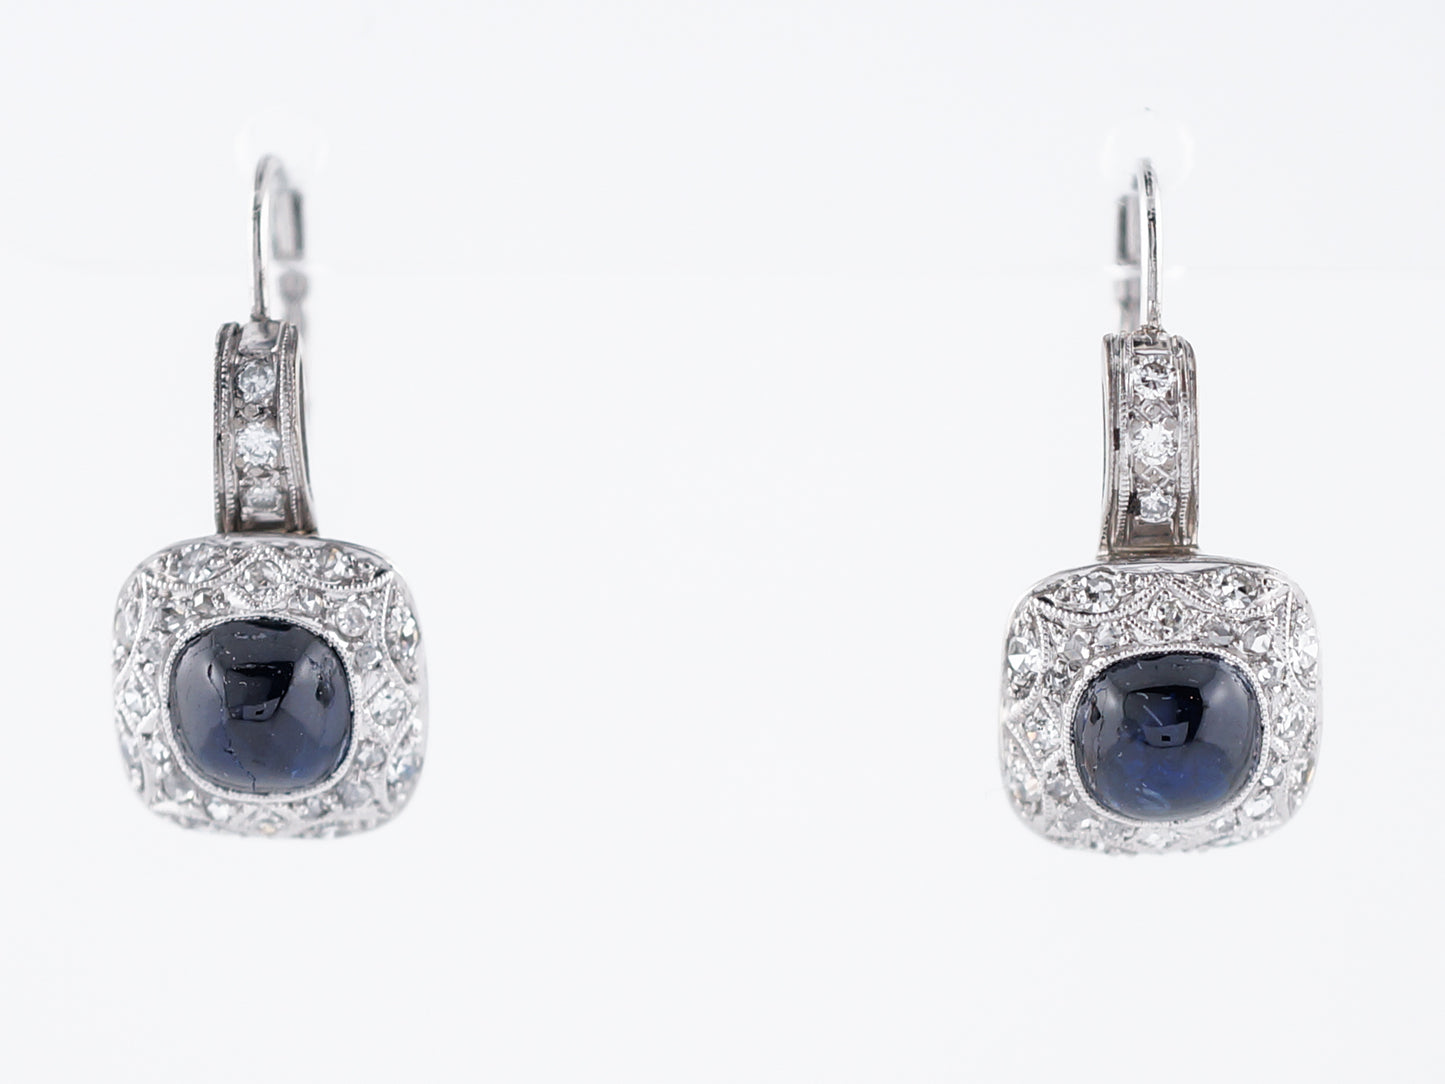 Antique Earrings Art Deco 12.12 Cabochon Cut Sapphires in Platinum